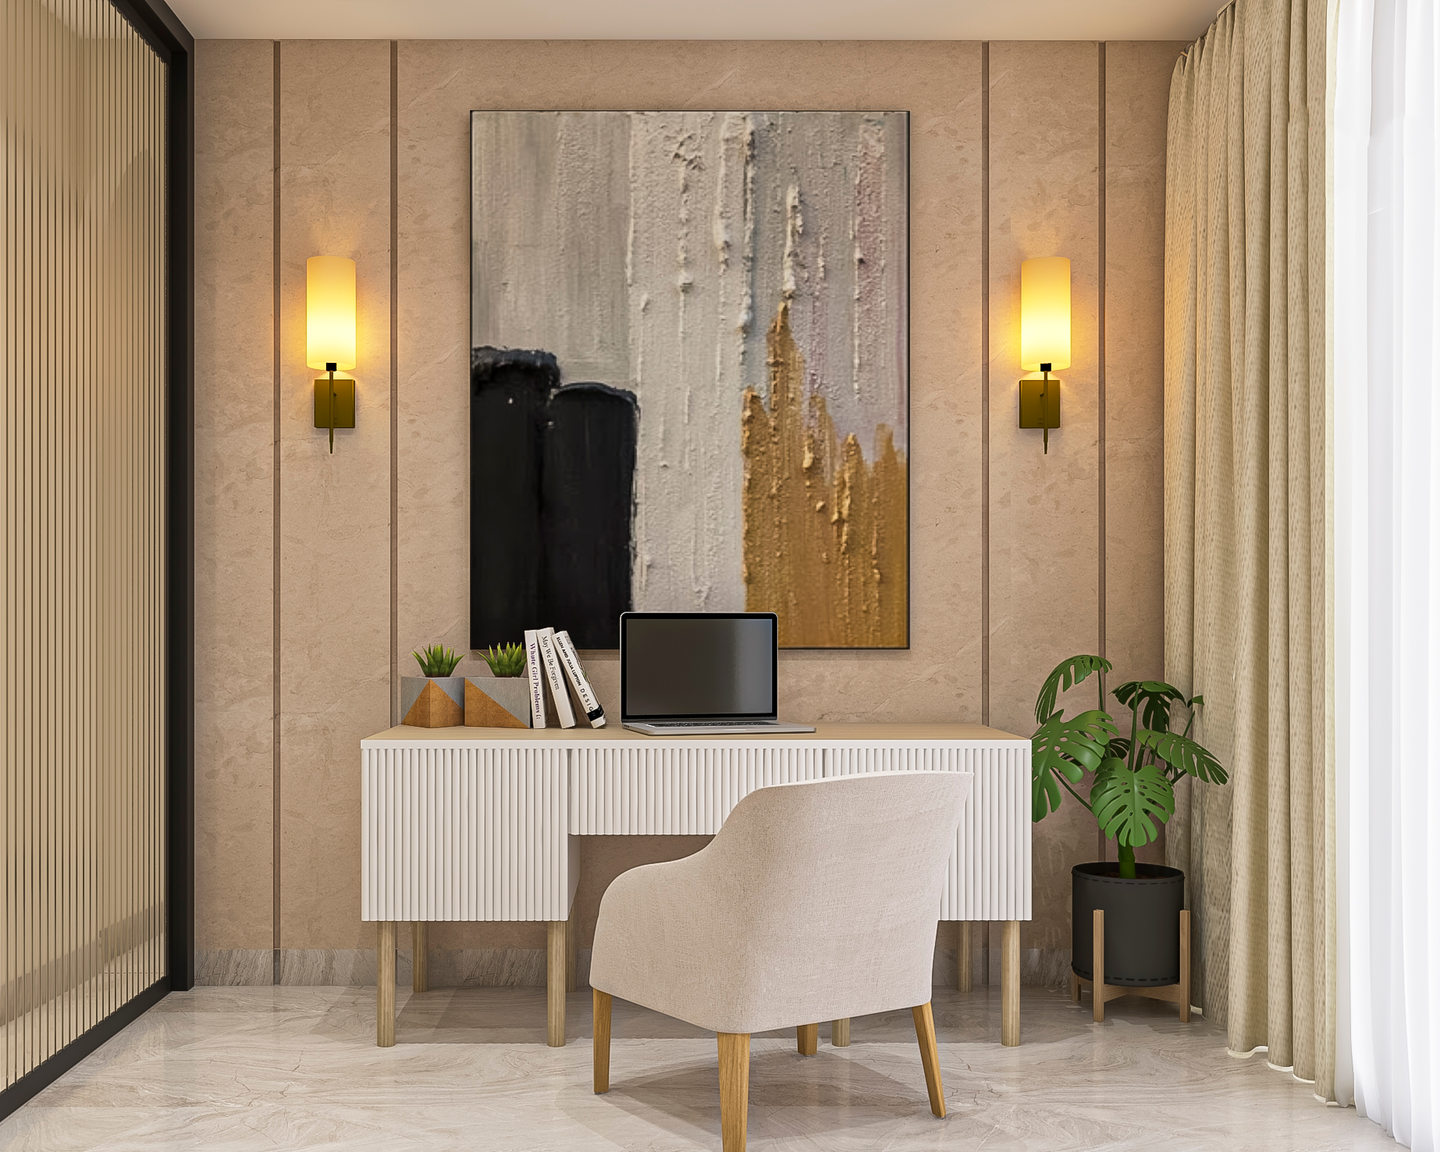 Classy Home Office Design Ideas - Livspace